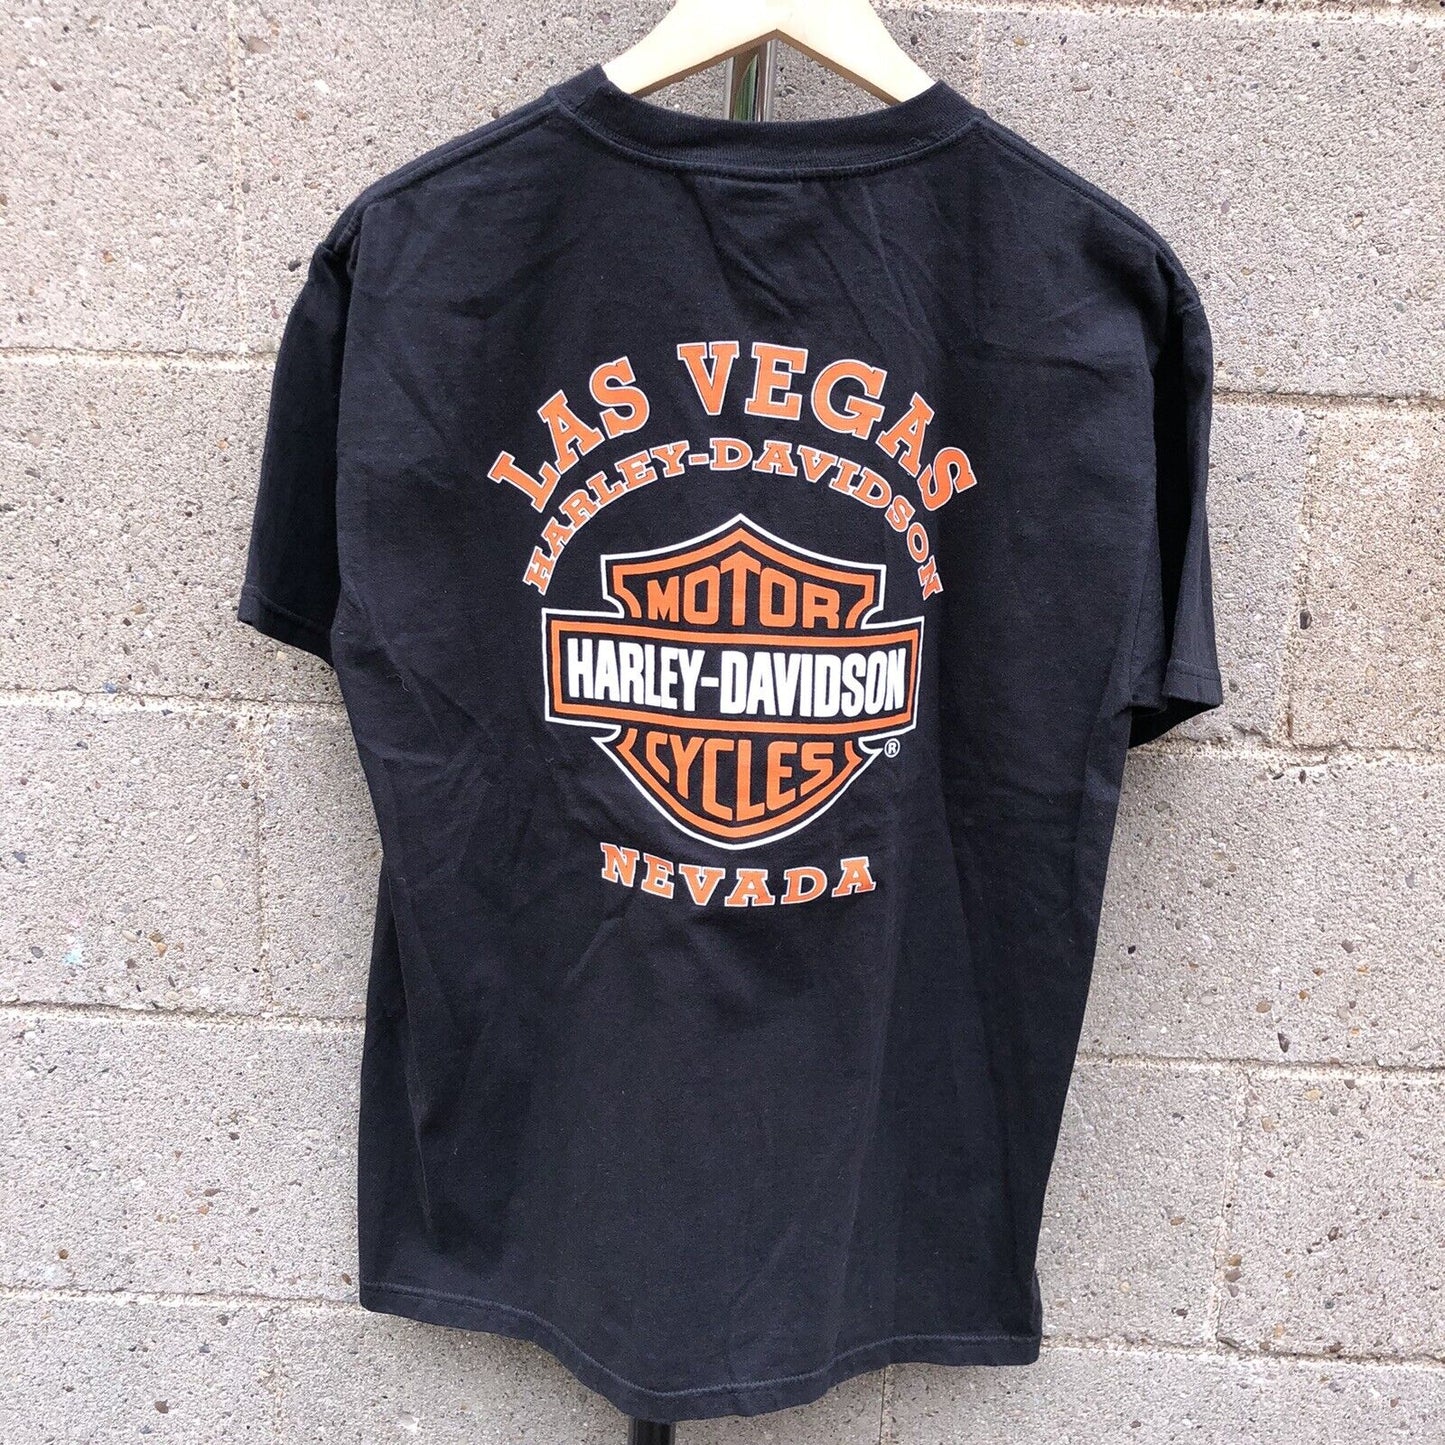 Harley Davidson Mens Medium Size Matters Qatar Graphic Shirt Sleeve T Shirt